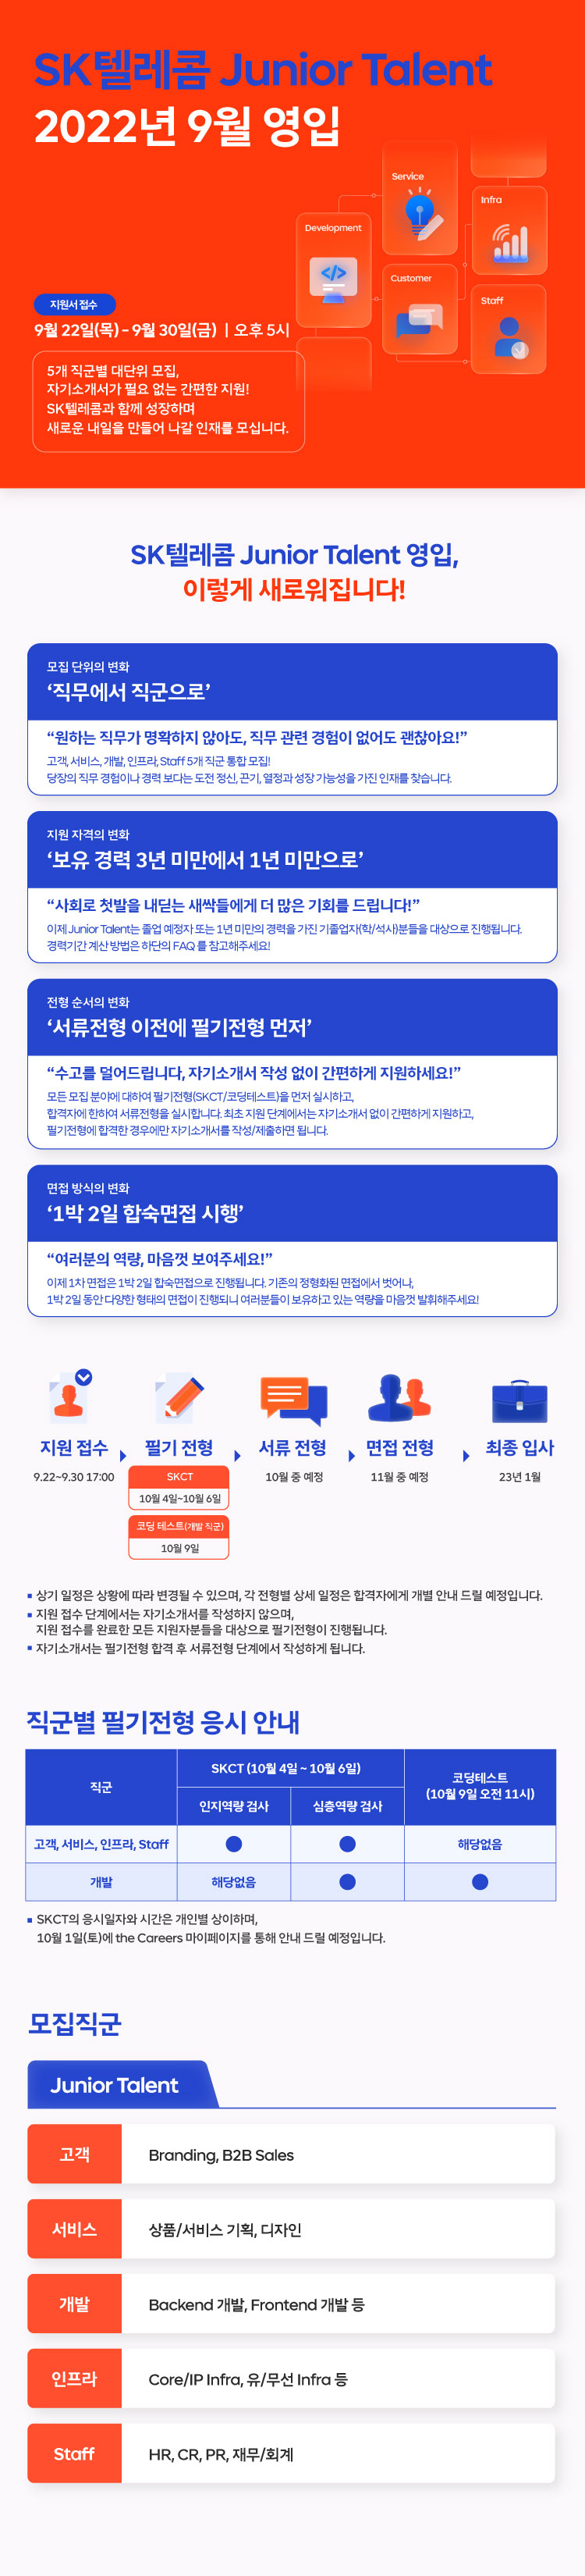 [SKT] 2022 SKT Junior Talent 9월 영입 홍보 첨부 이미지